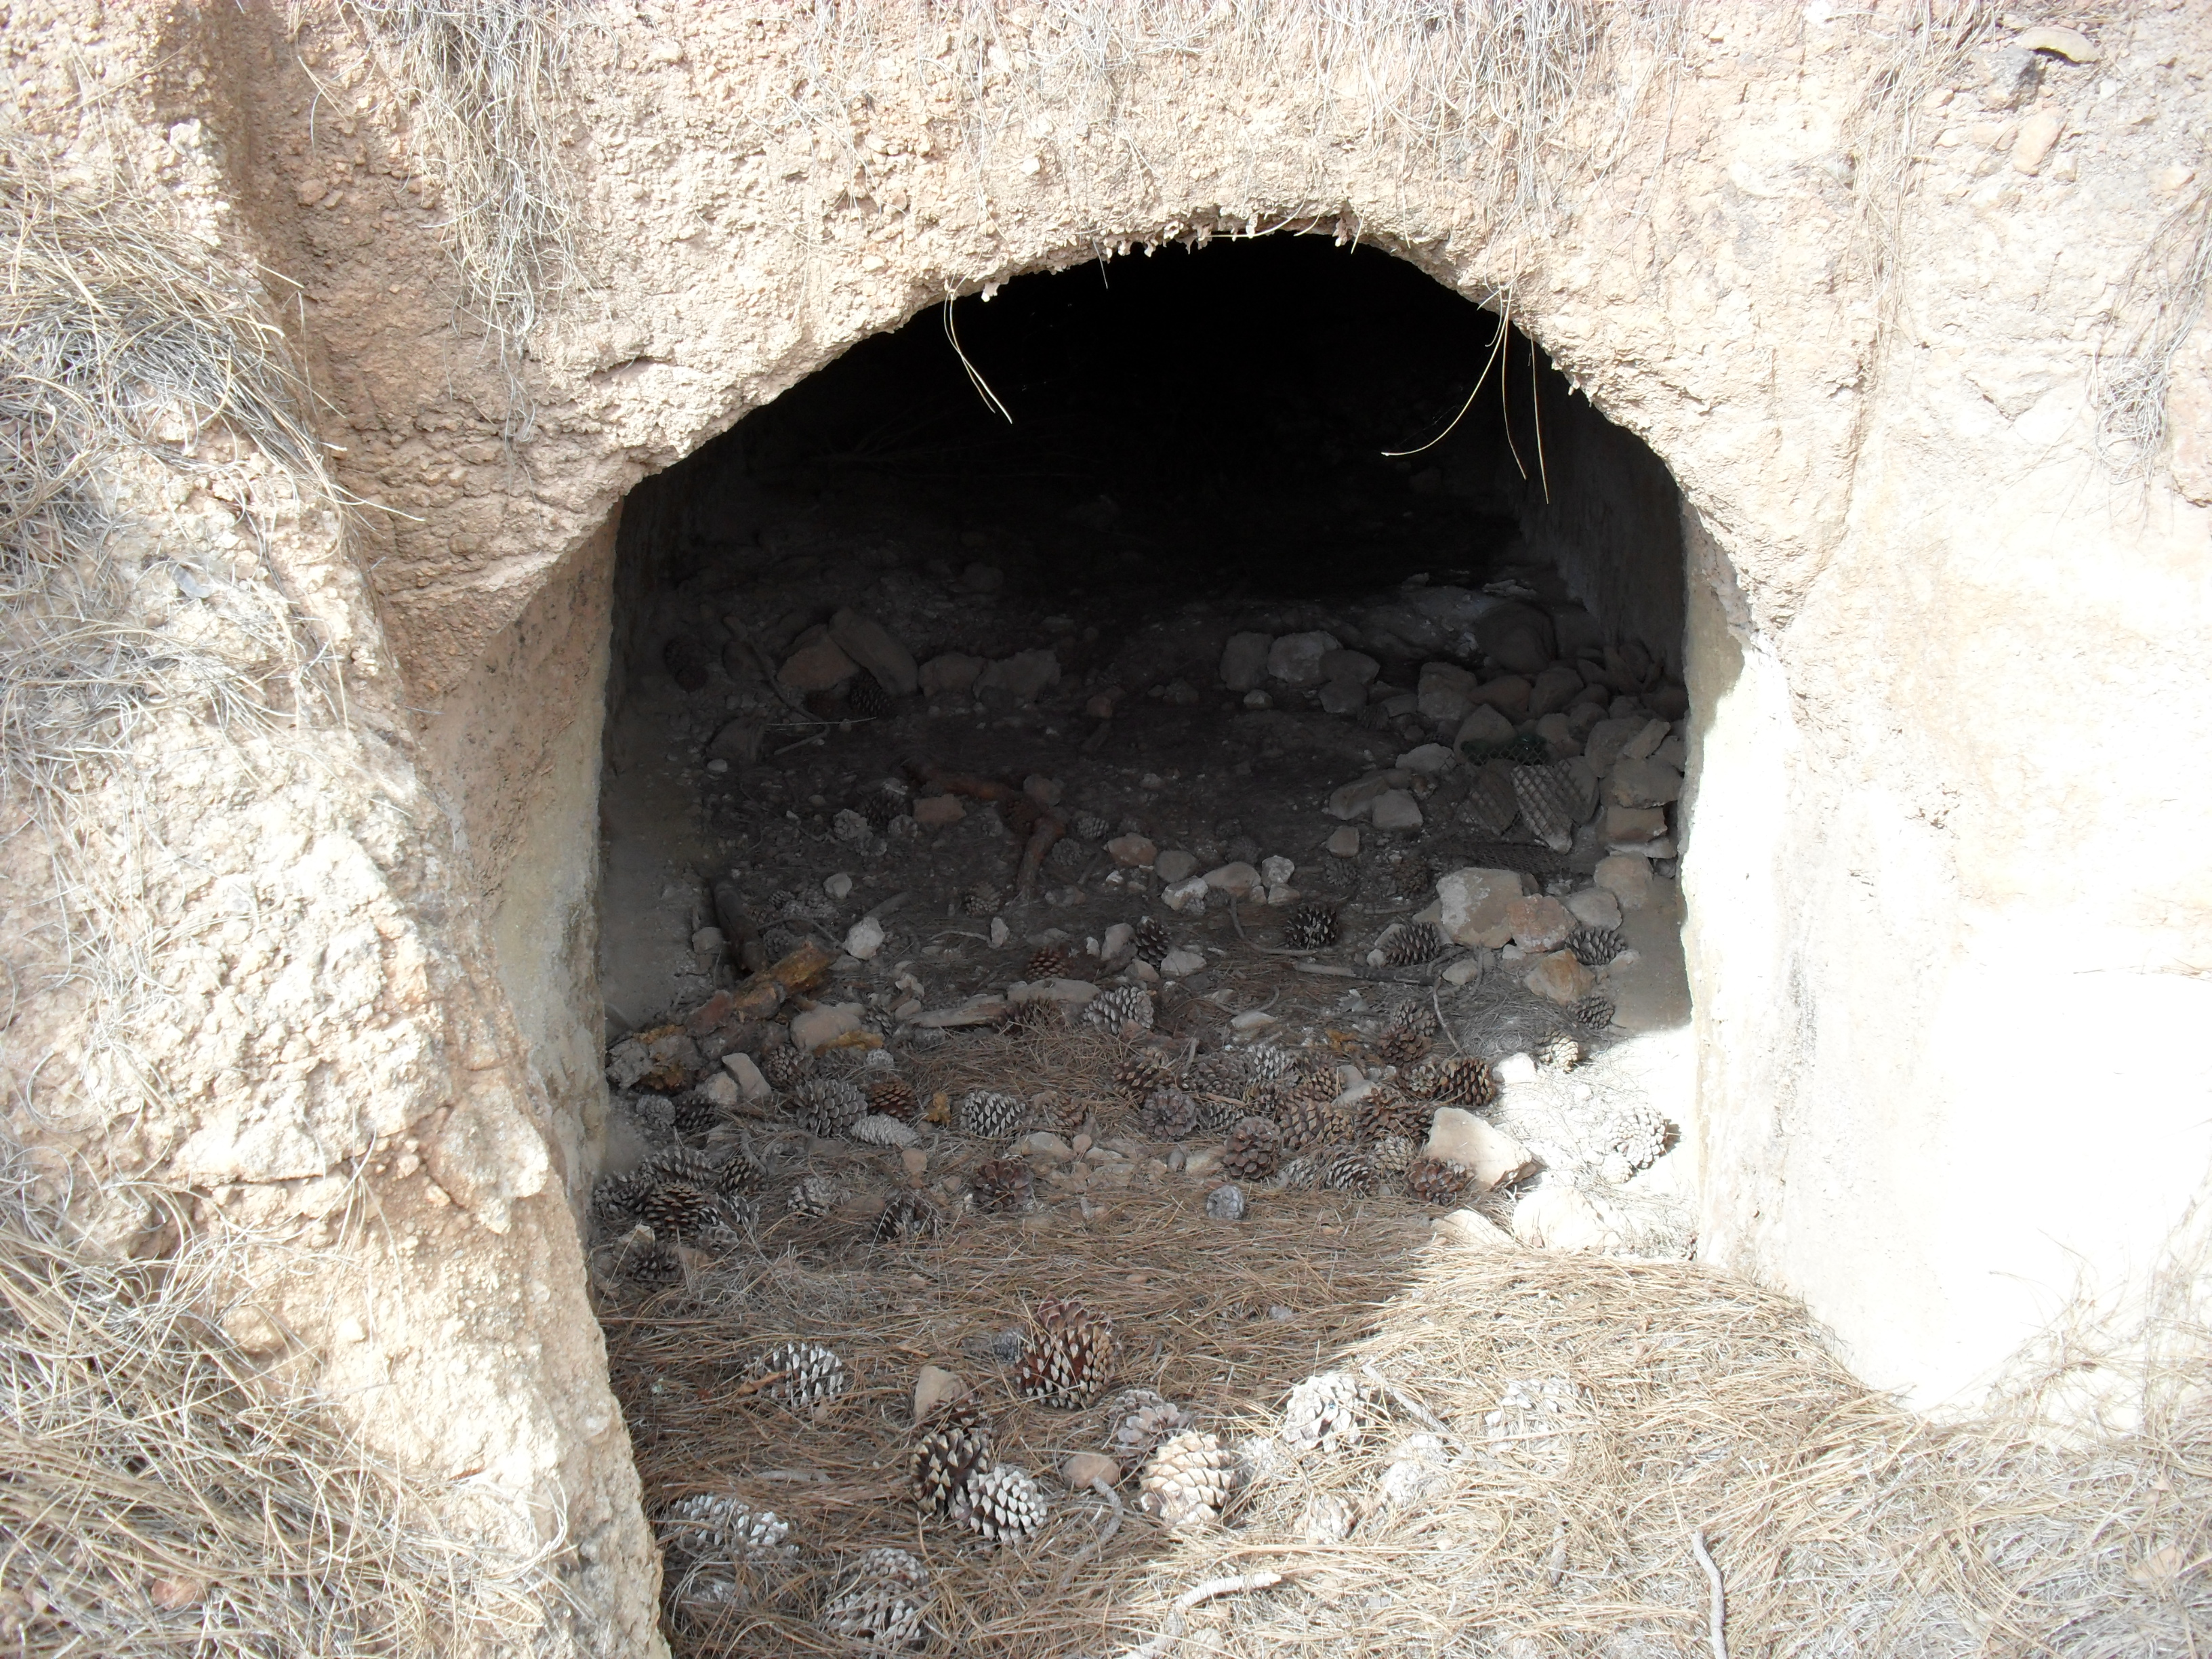 A cave. (c) cliodna on sxc.hu